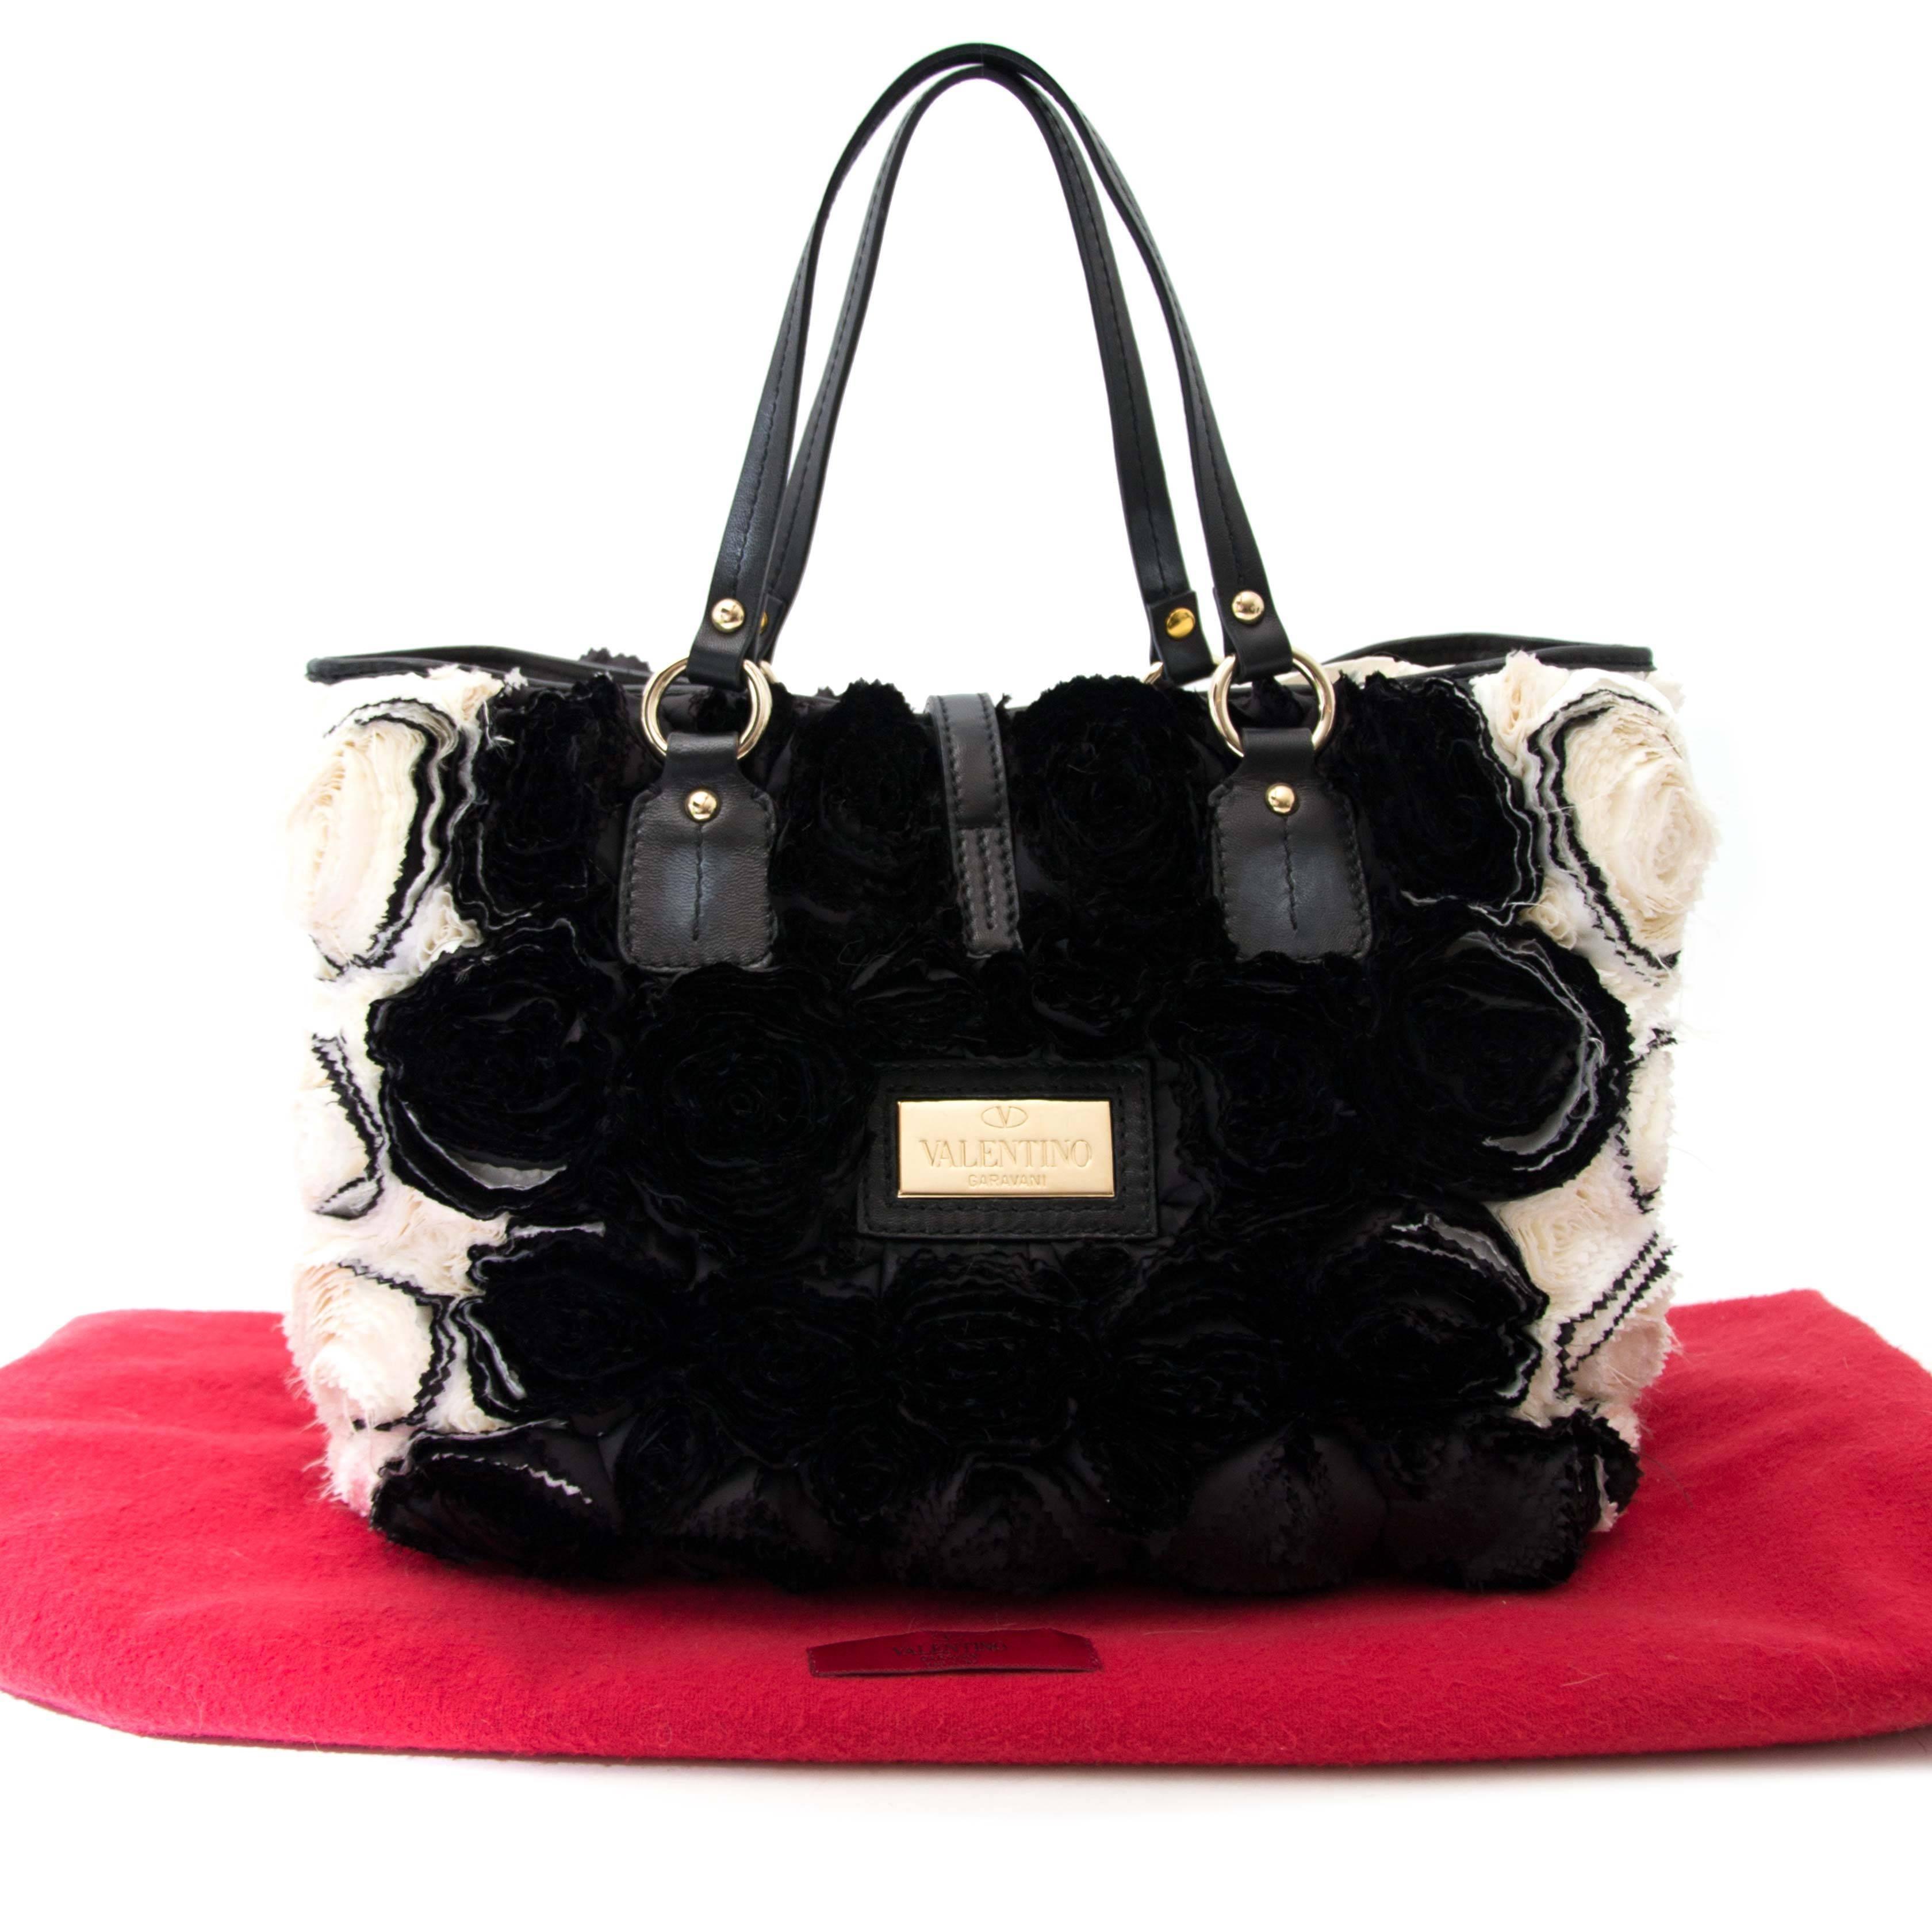 Women's Valentino Rosette Black and White Shoulder Bag